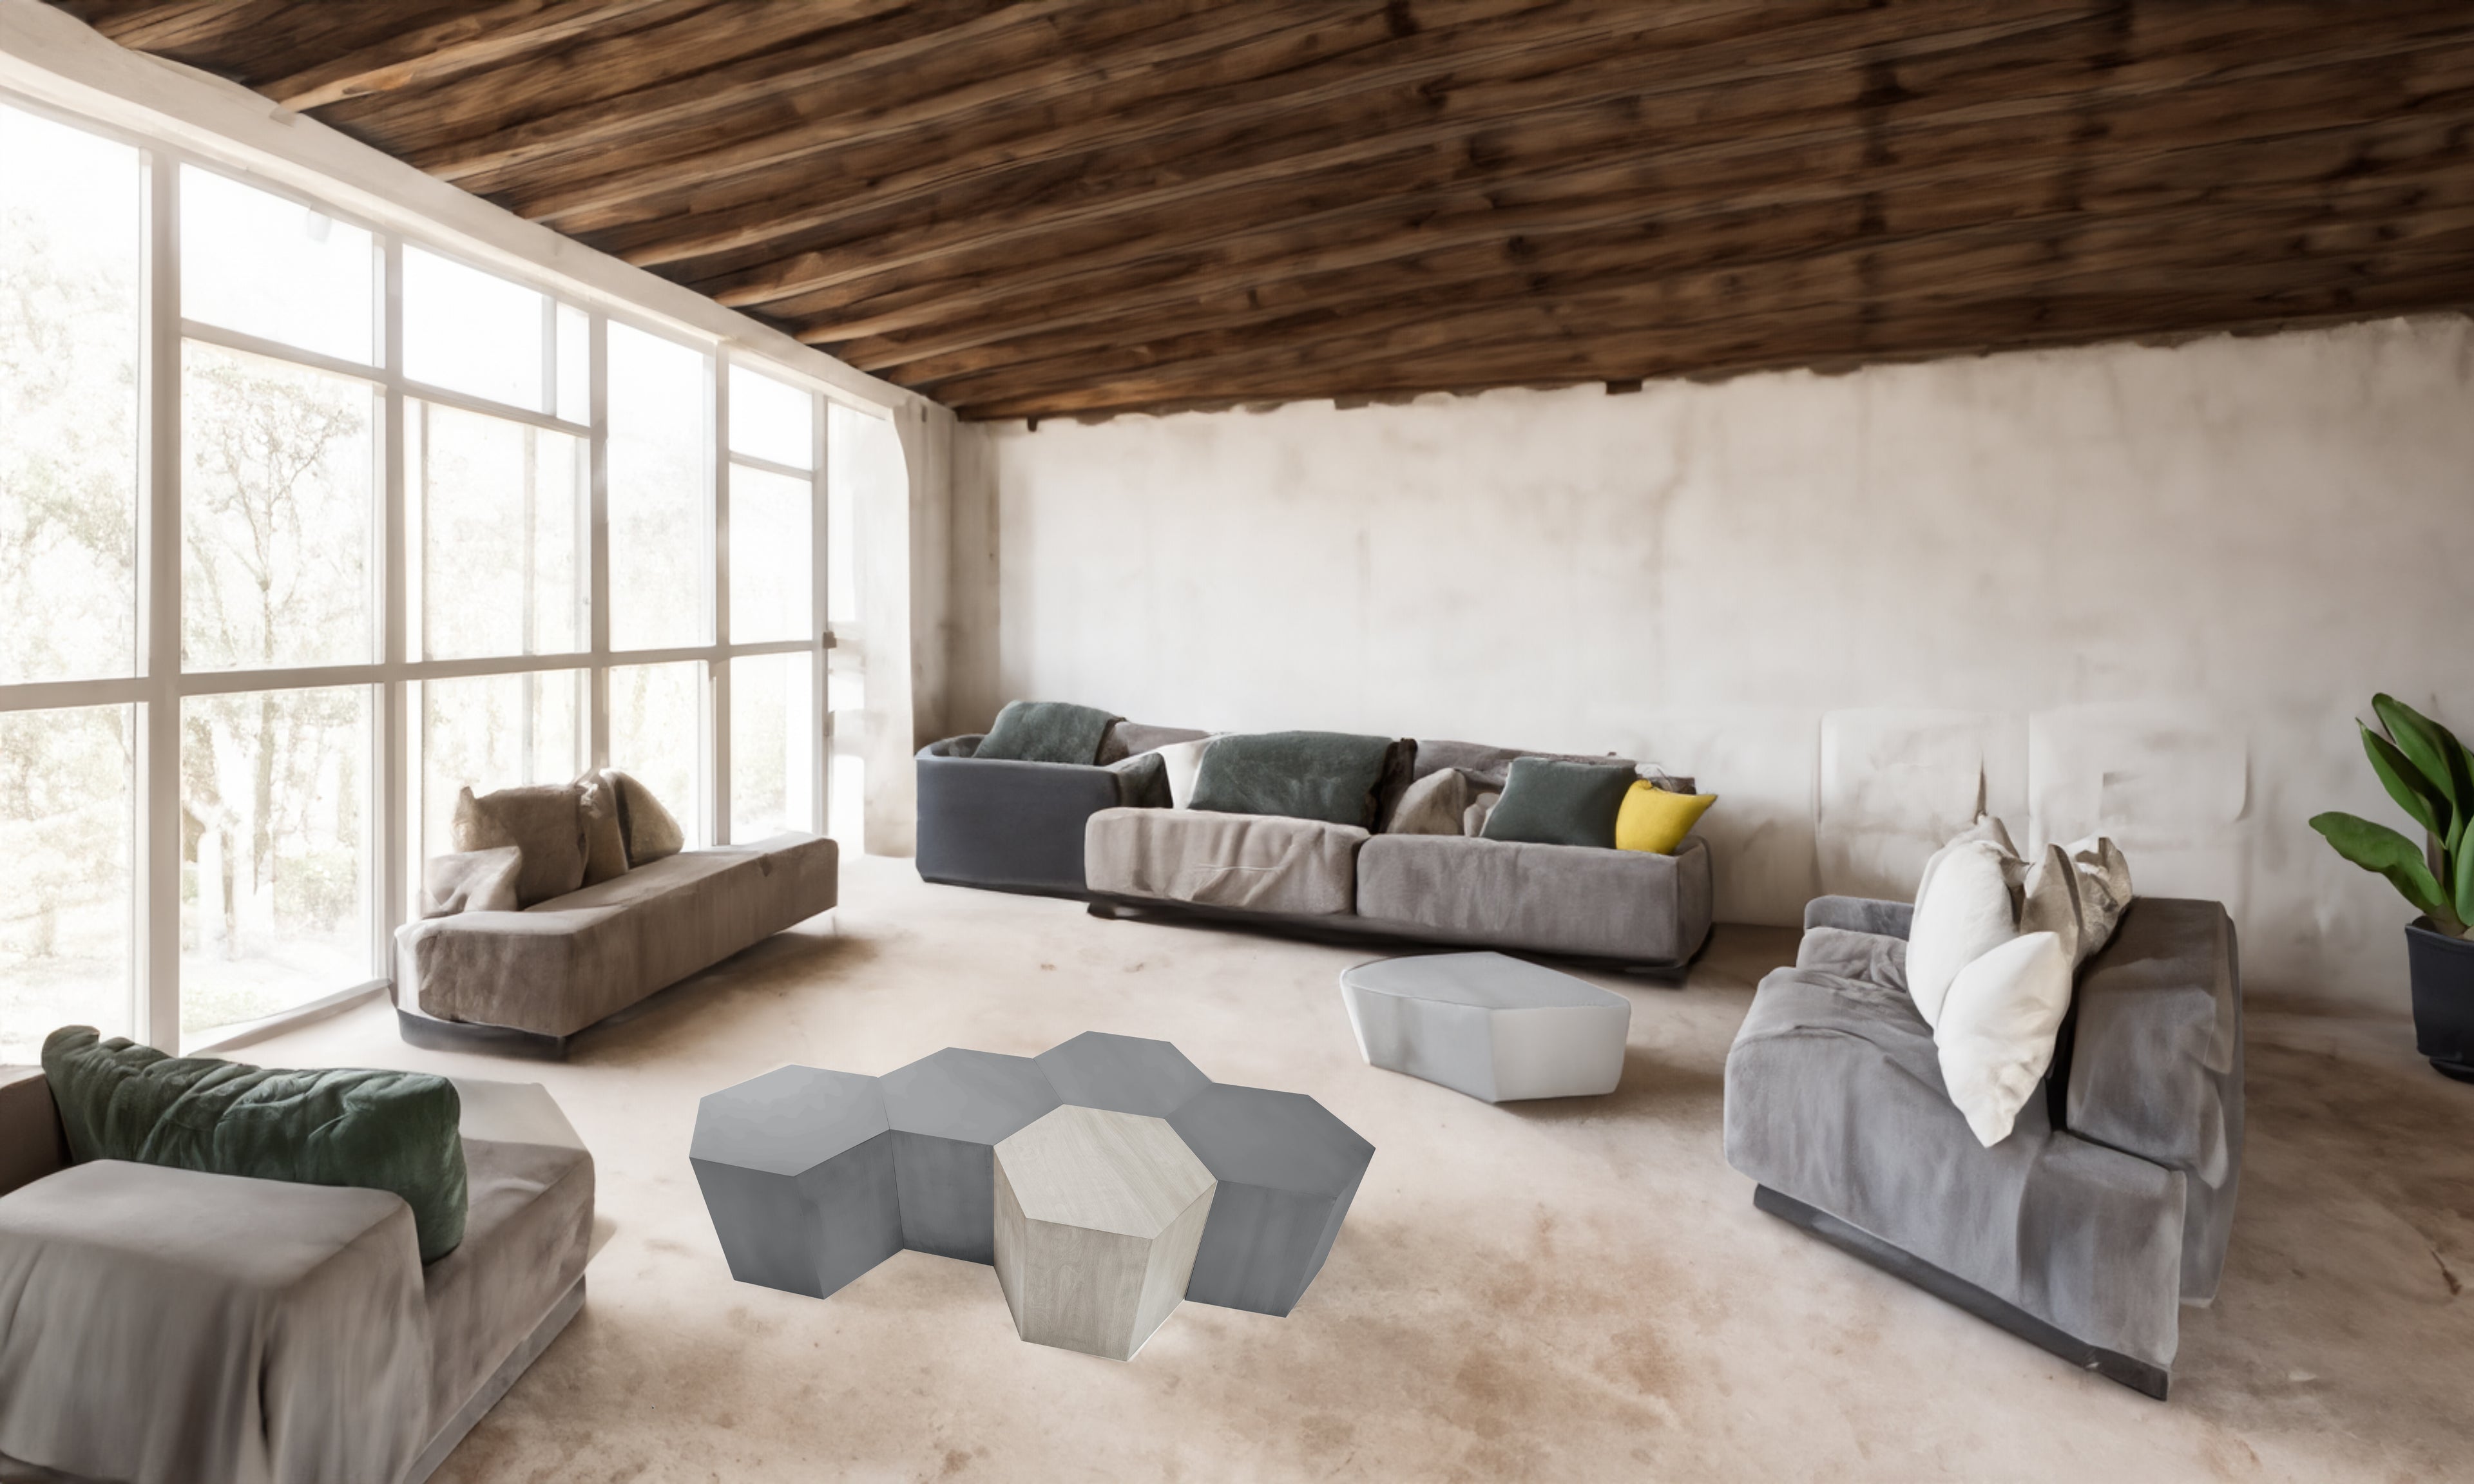 Hexagon Wood Modern Geometric Matte Grey Table